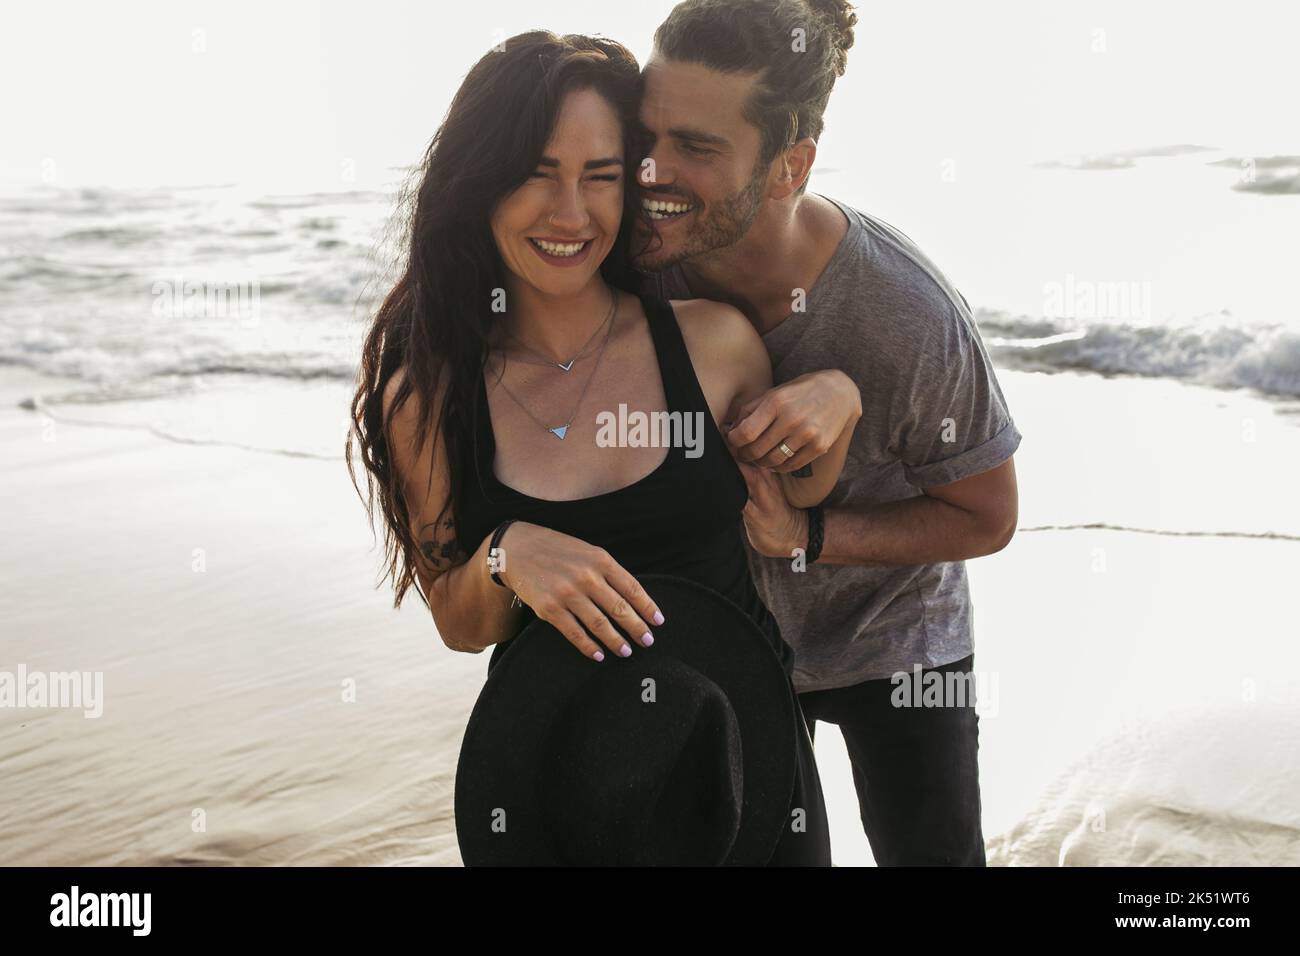 cheerful man tickling joyful girlfriend in dress near ocean in portugal,stock image Stock Photo